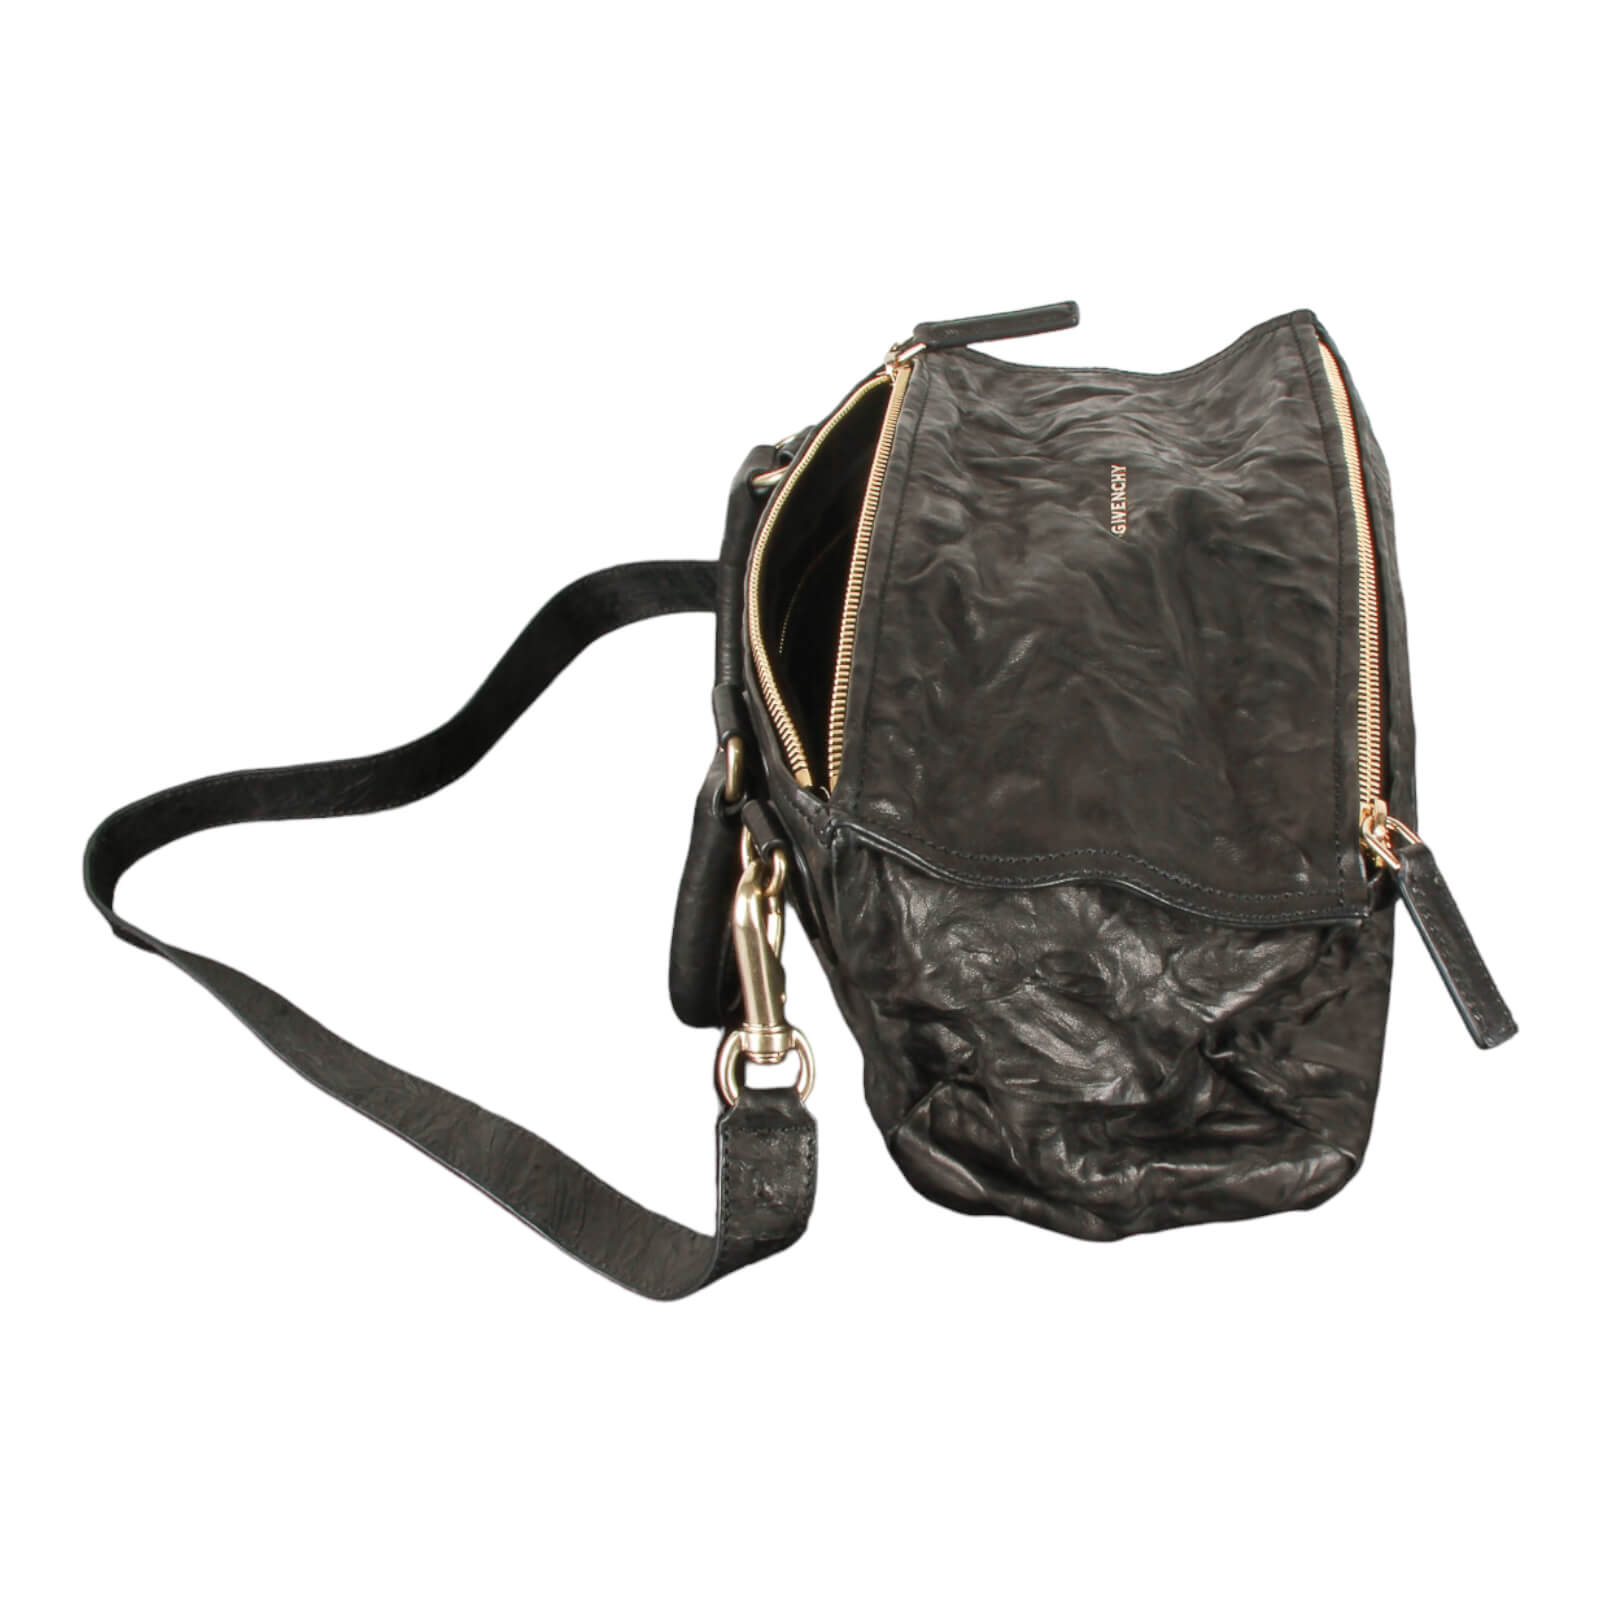 Givenchy Handbags pandora Women BB500AB0LZ001 Leather 1240€